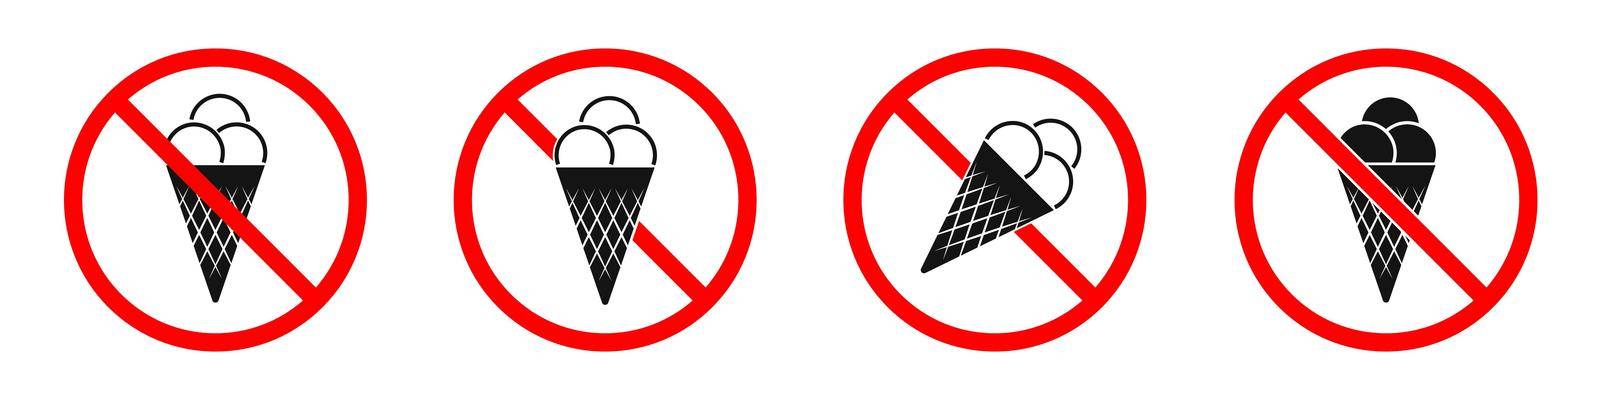 Ice cream are forbidden. Stop ice cream icons. Vector illustration. No ice cream entry